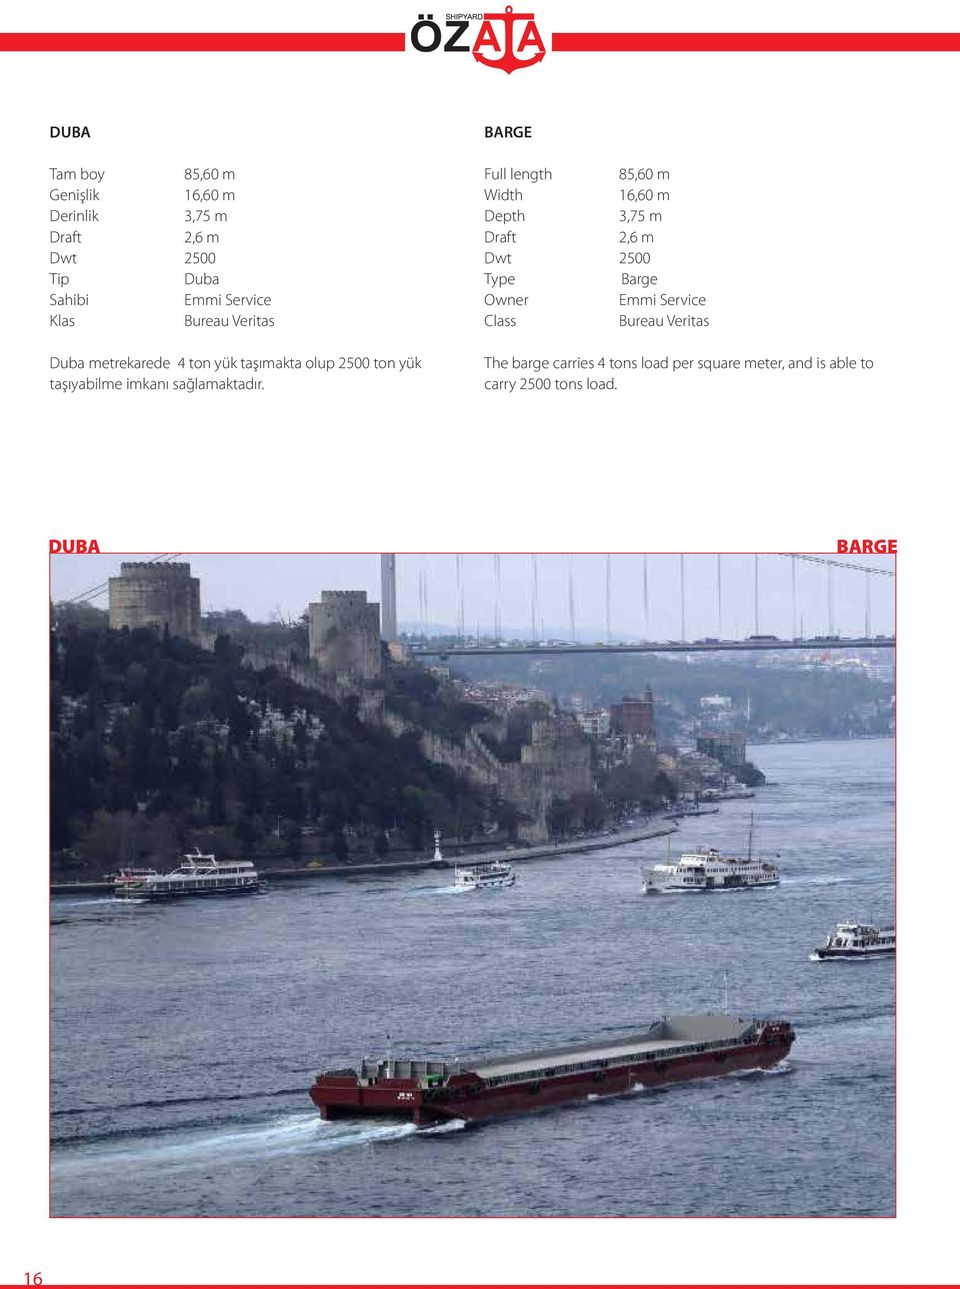 BARGE Full length 85,60 m 16,60 m 3,75 m 2,6 m Dwt 2500 Barge Emmi Service The